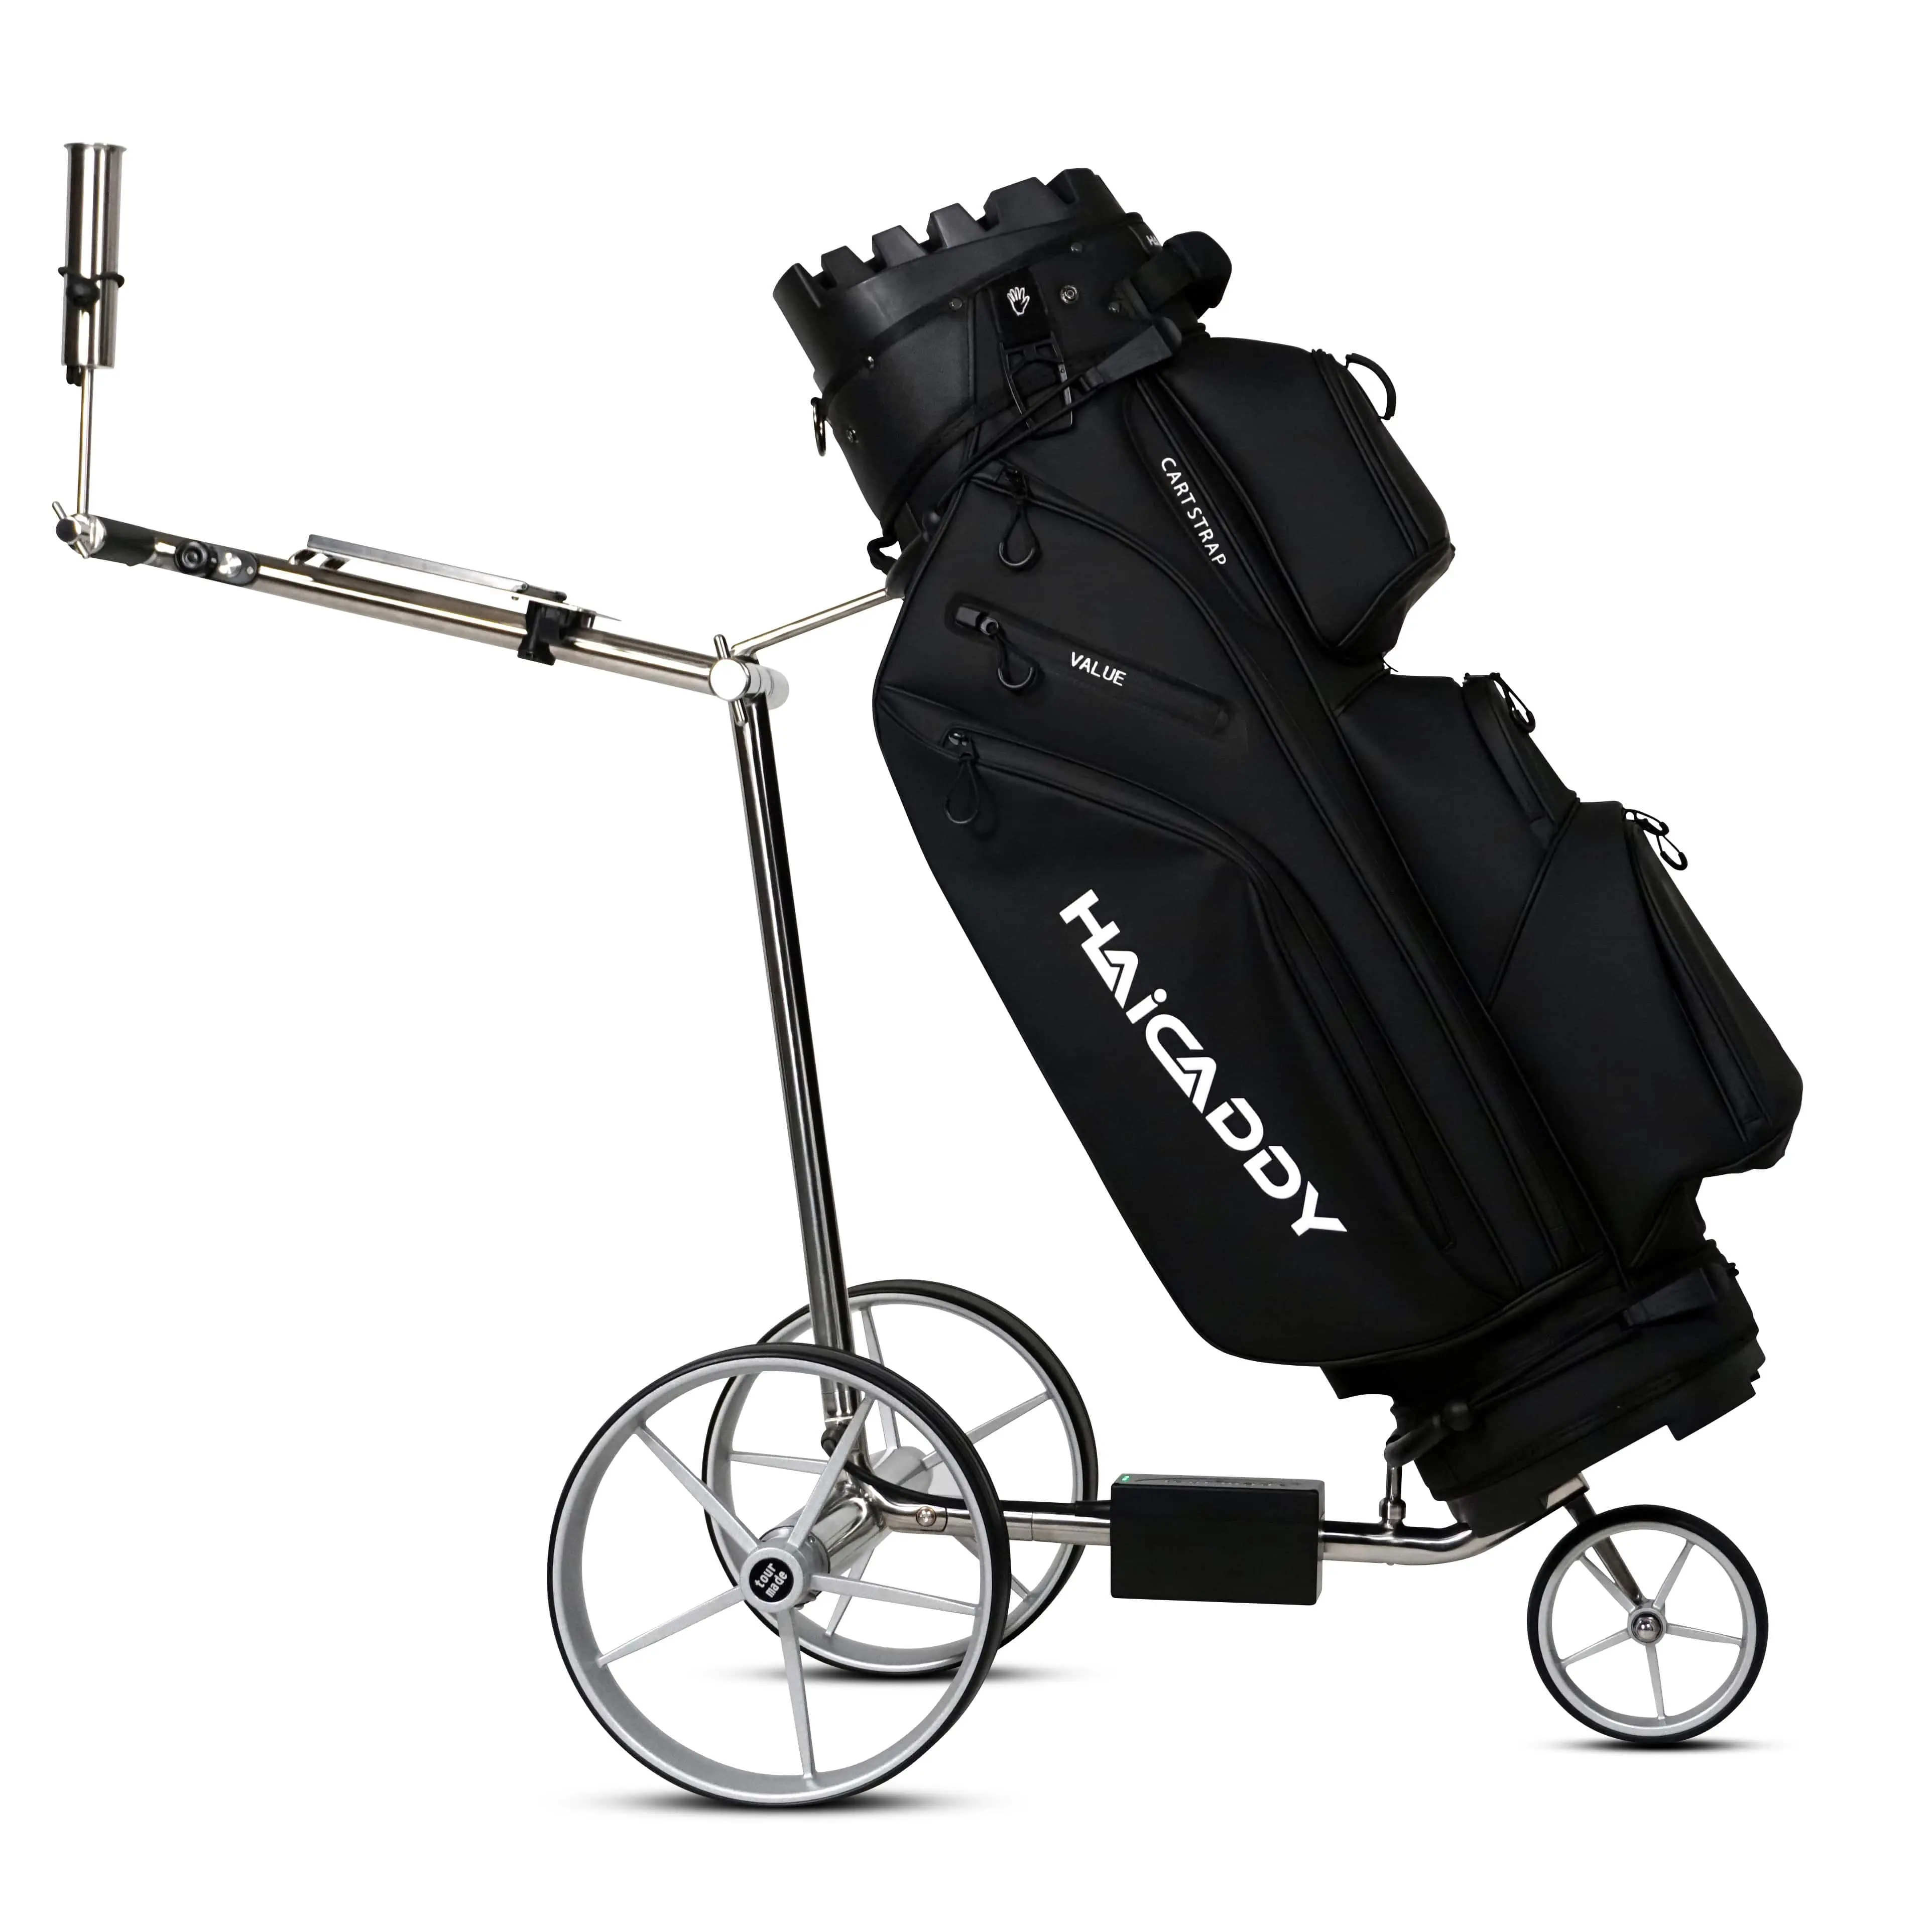 Tour Made Haicaddy® HC5 electric golf trolley